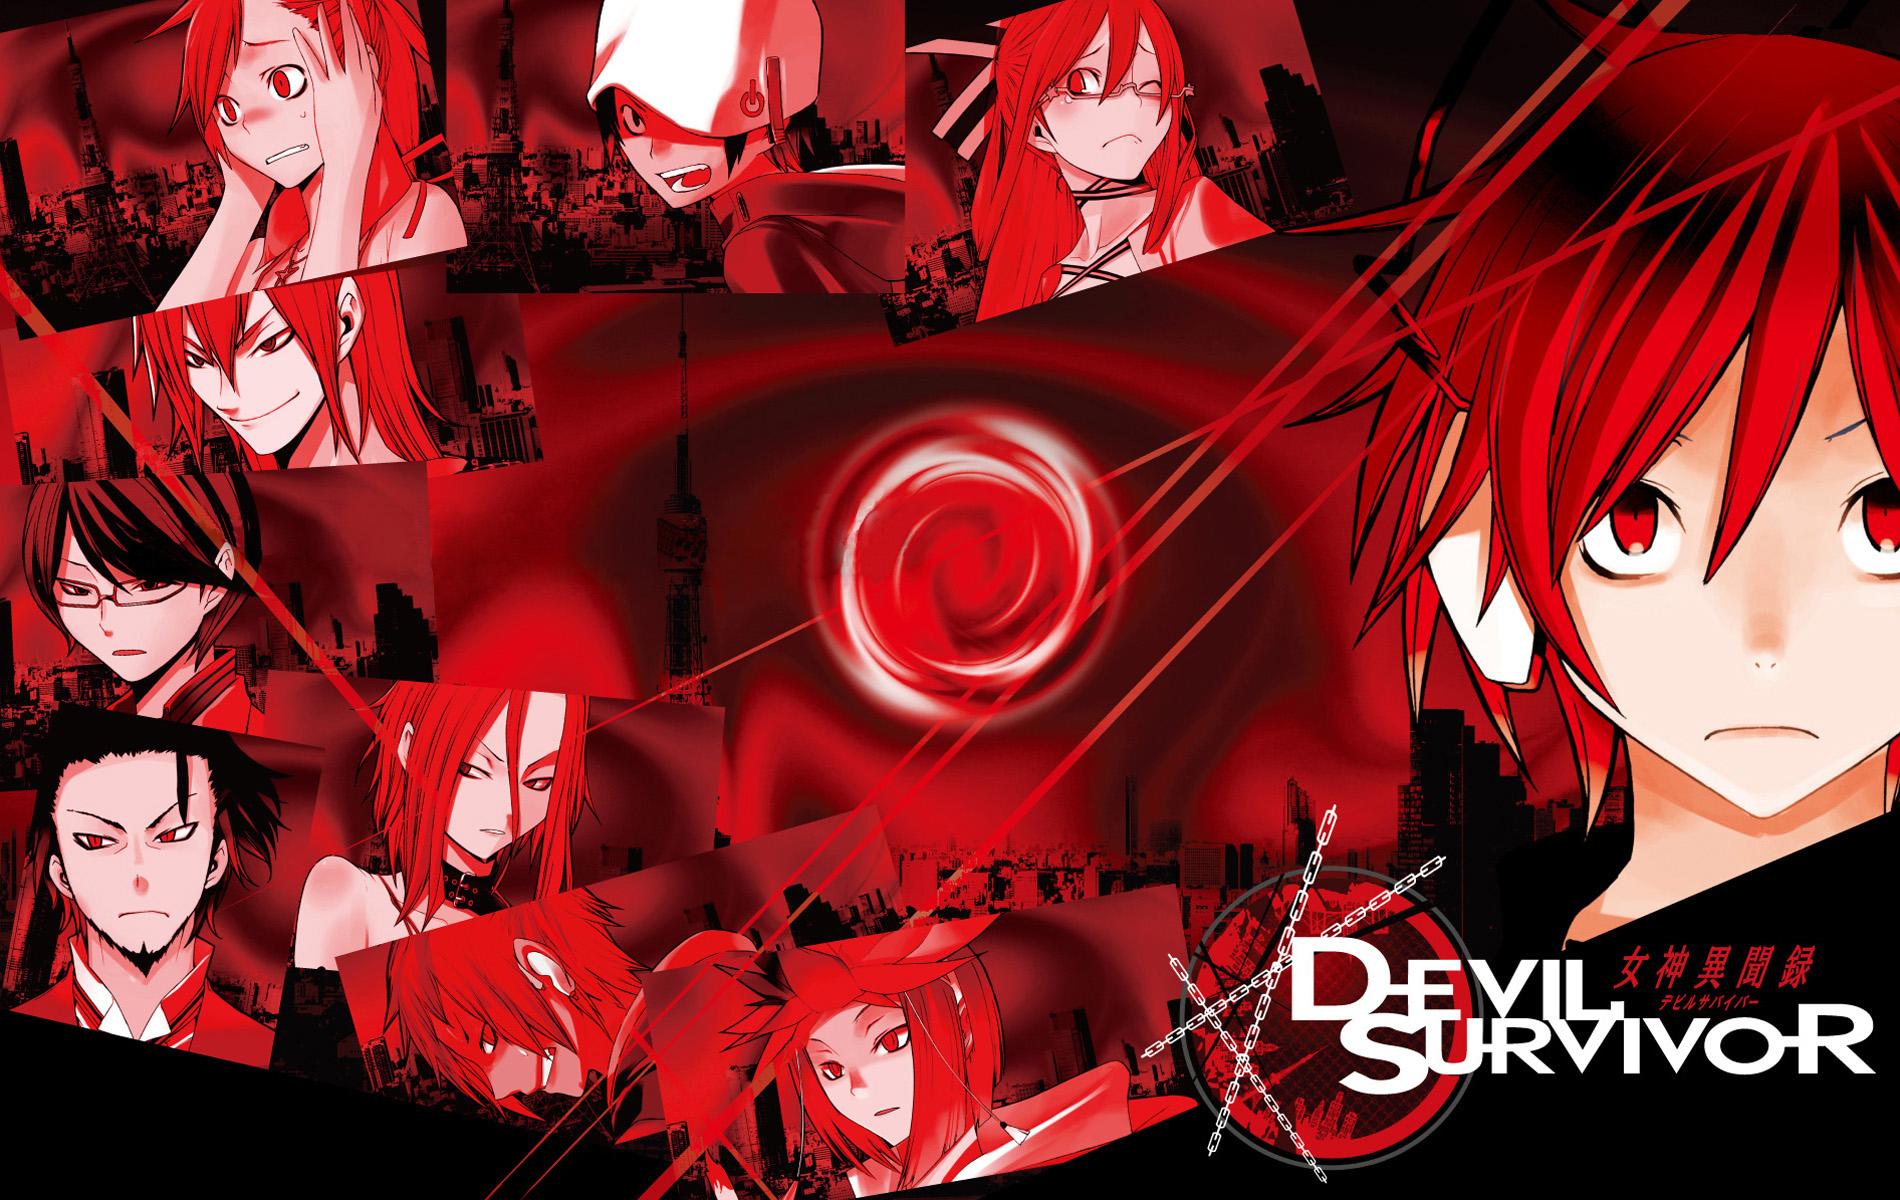 Devil Survivor Wallpaper. Devil May Cry Wallpaper, Daredevil Wallpaper and Devil Wallpaper